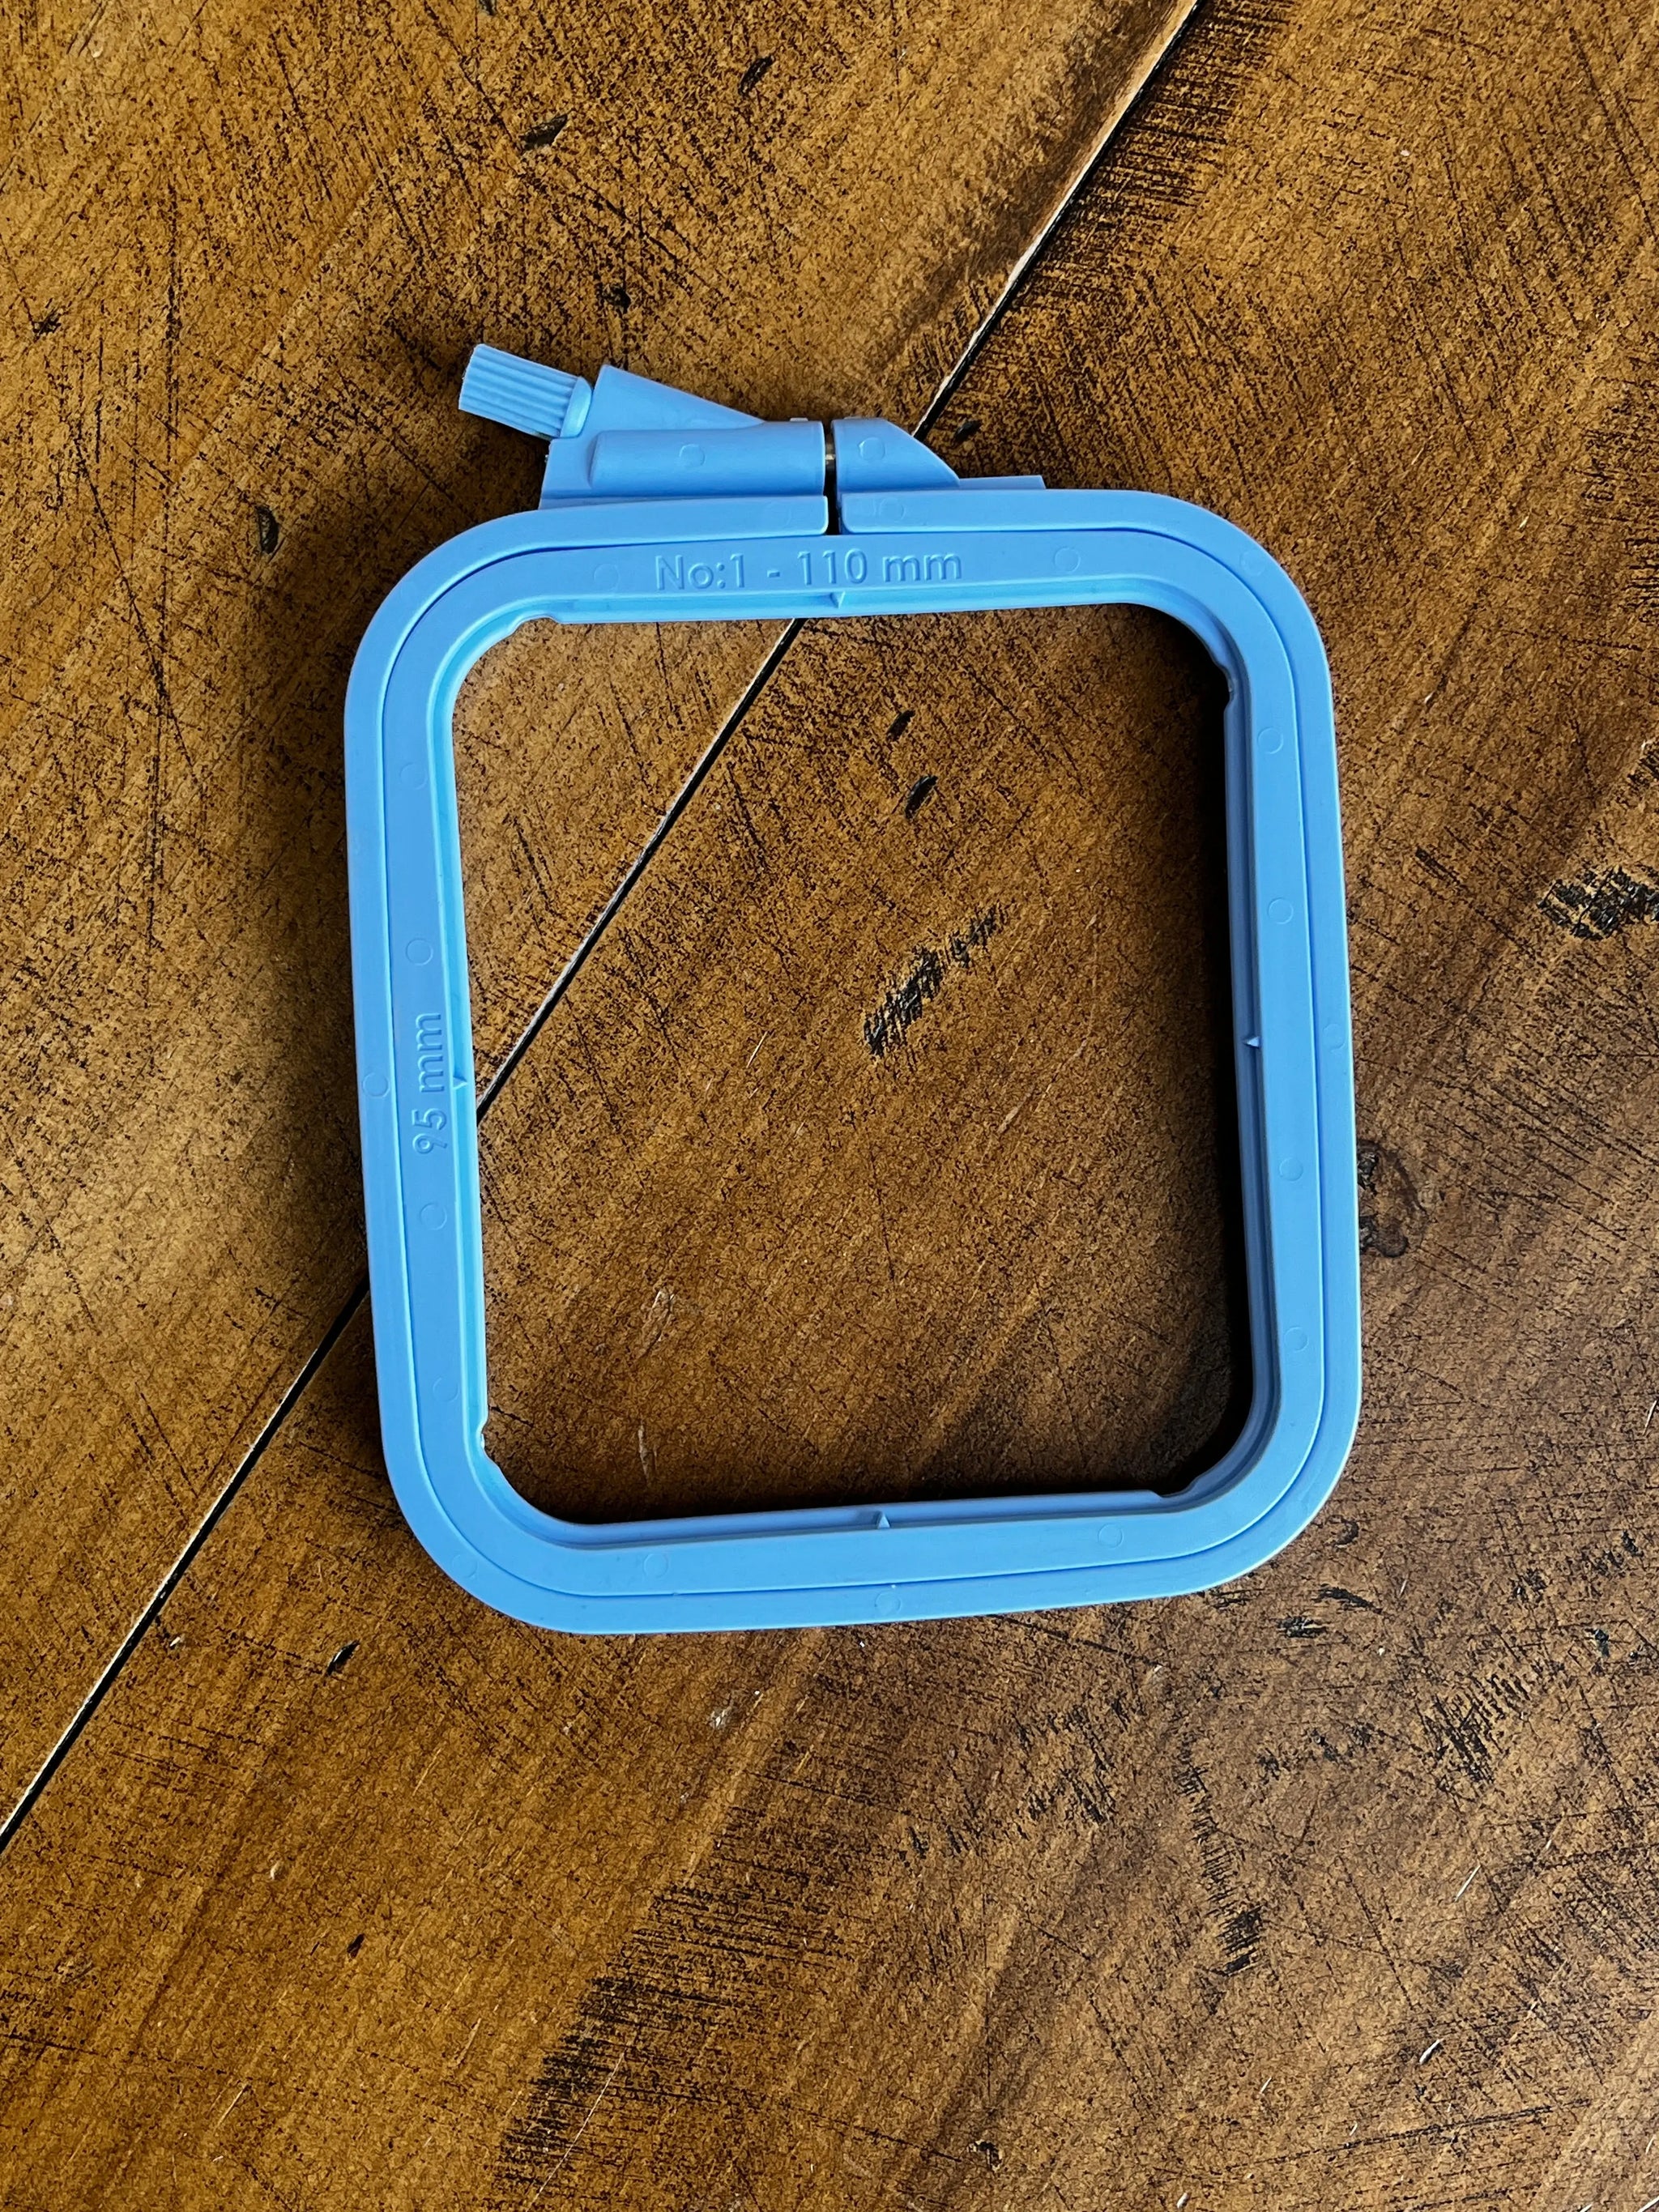 Nurge Square (Rectangular) Plastic Hoops - Nurge